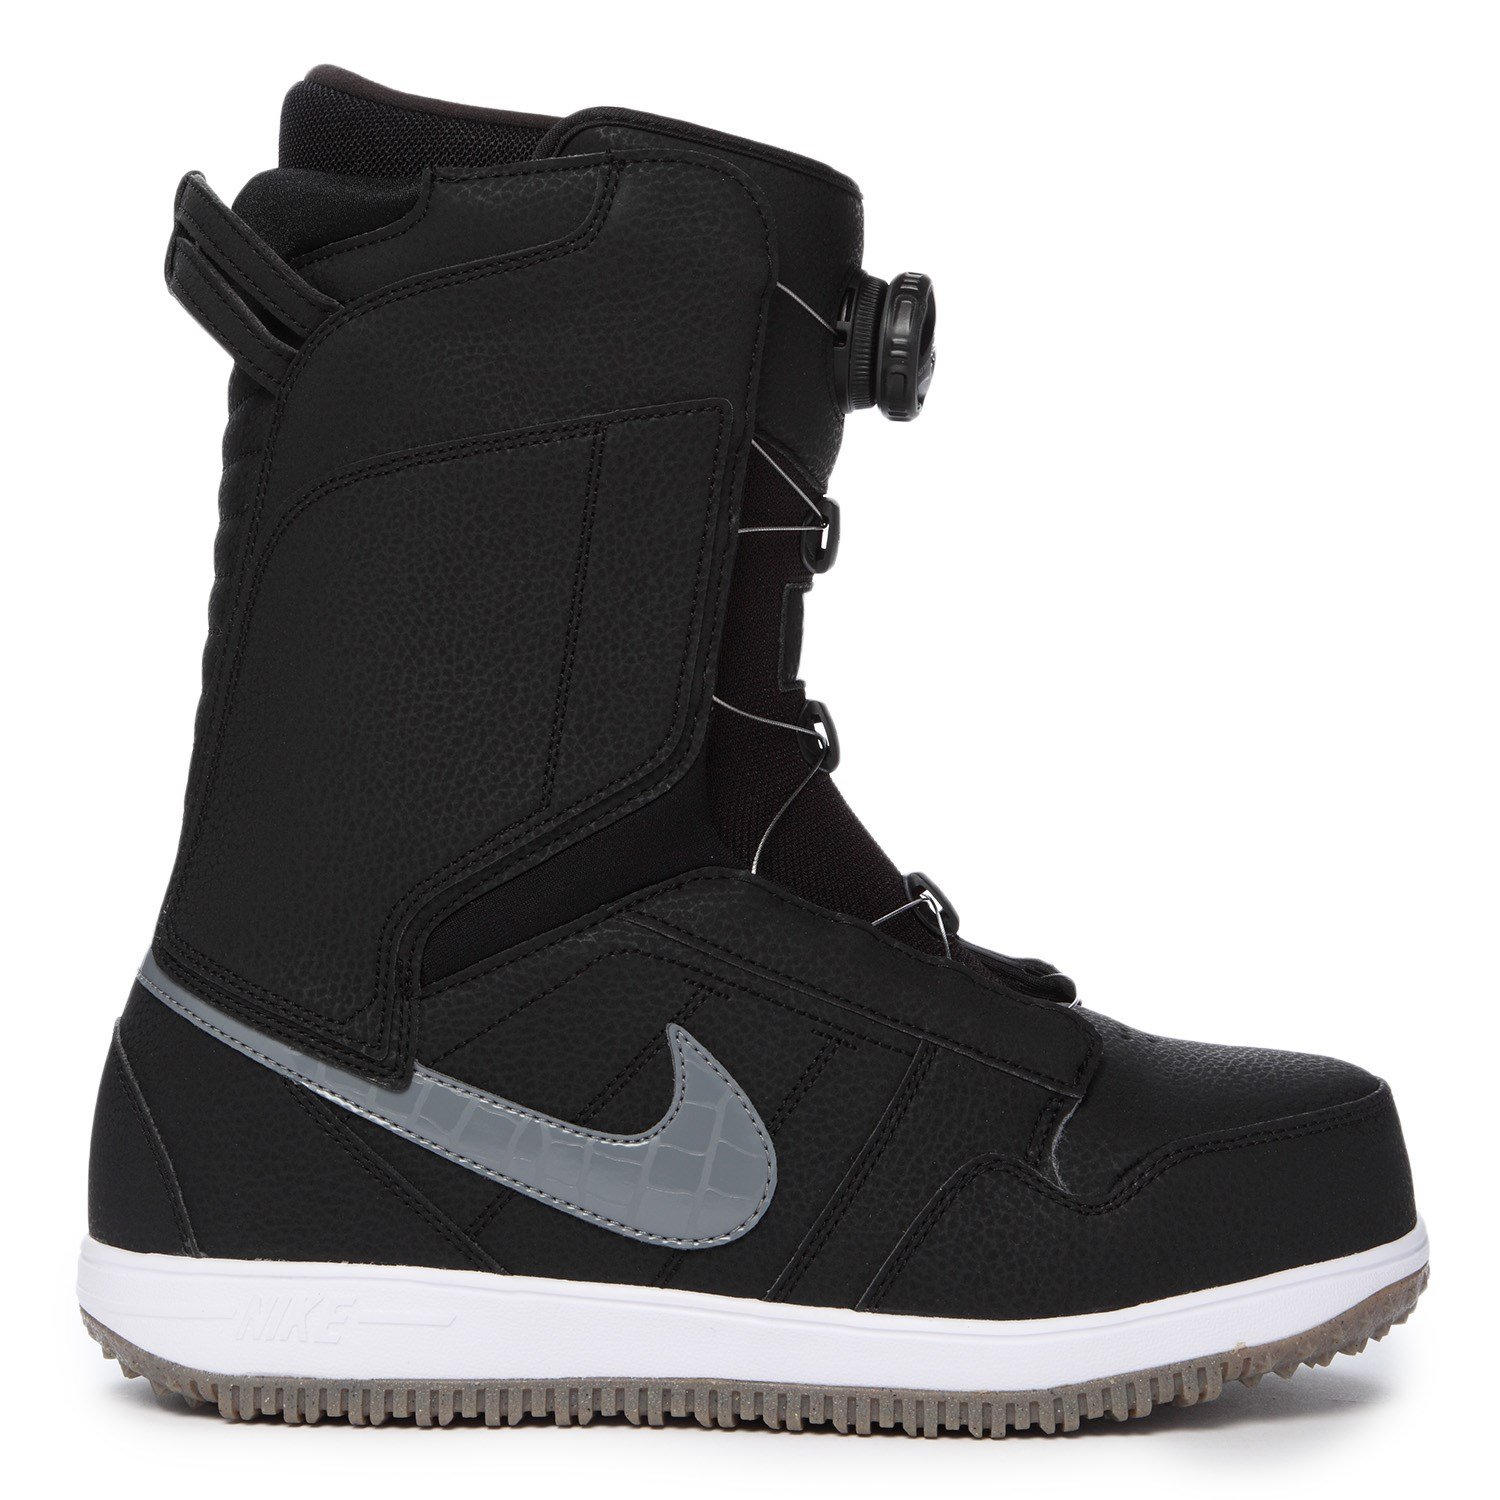 Nike SB Vapen Boa Snowboard Boots 2015 